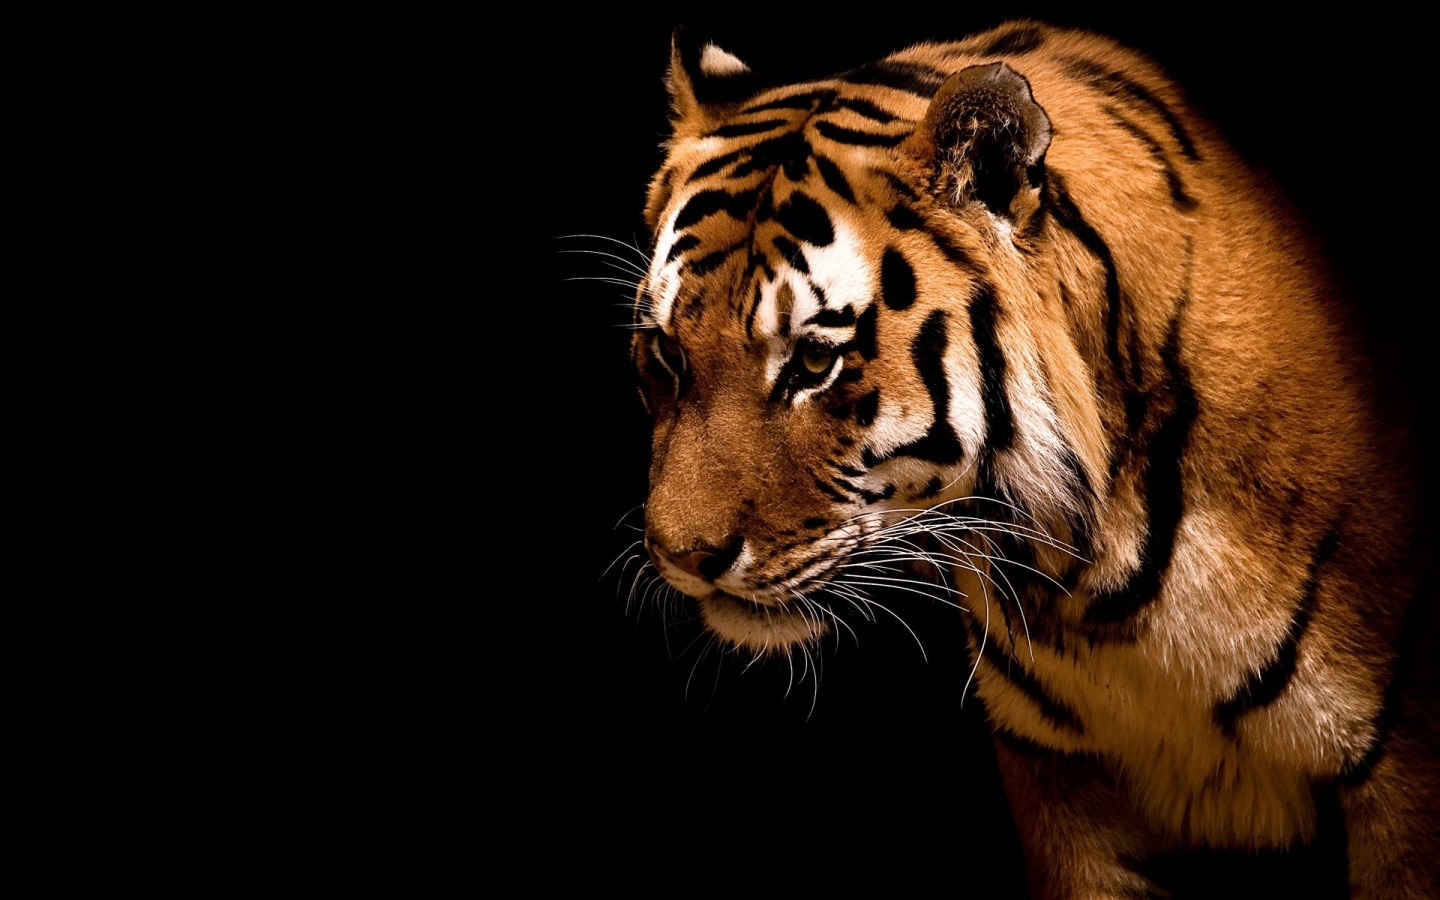 Impressive Tiger for 1440 x 900 widescreen resolution